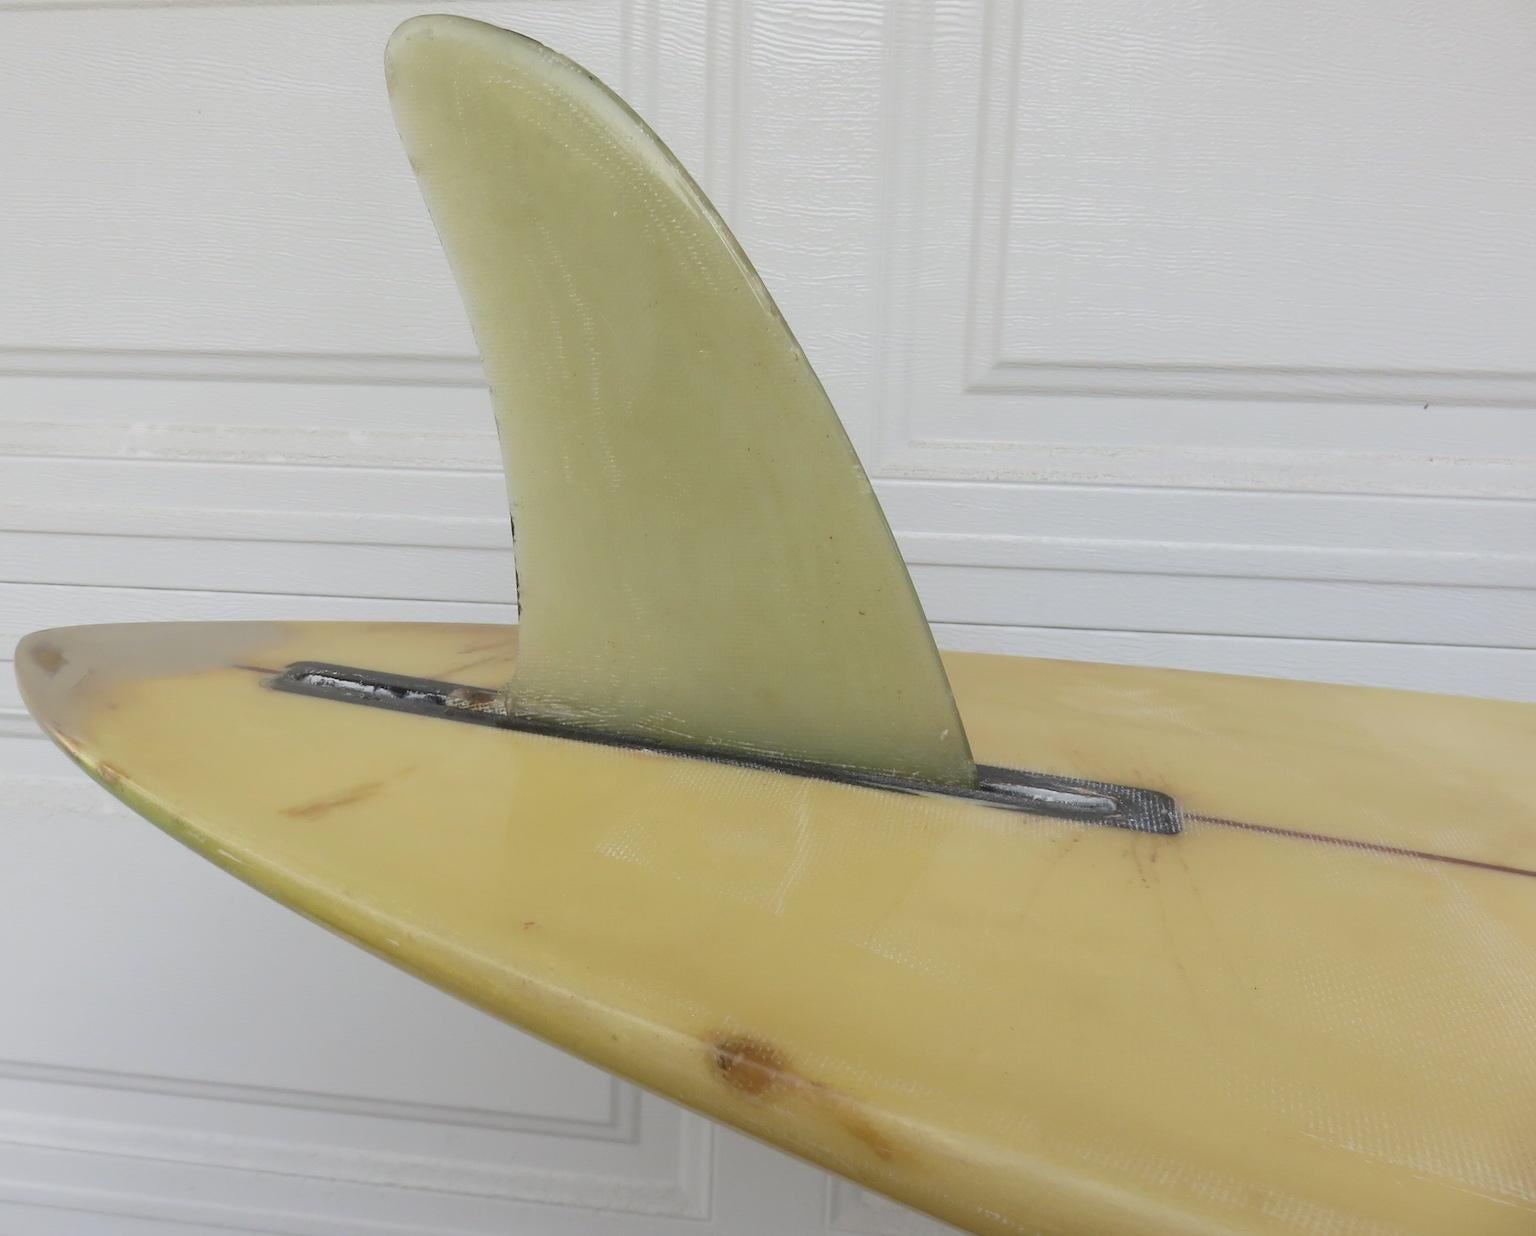 American 1970s Vintage Zephyr Surfboard by Jeff Ho